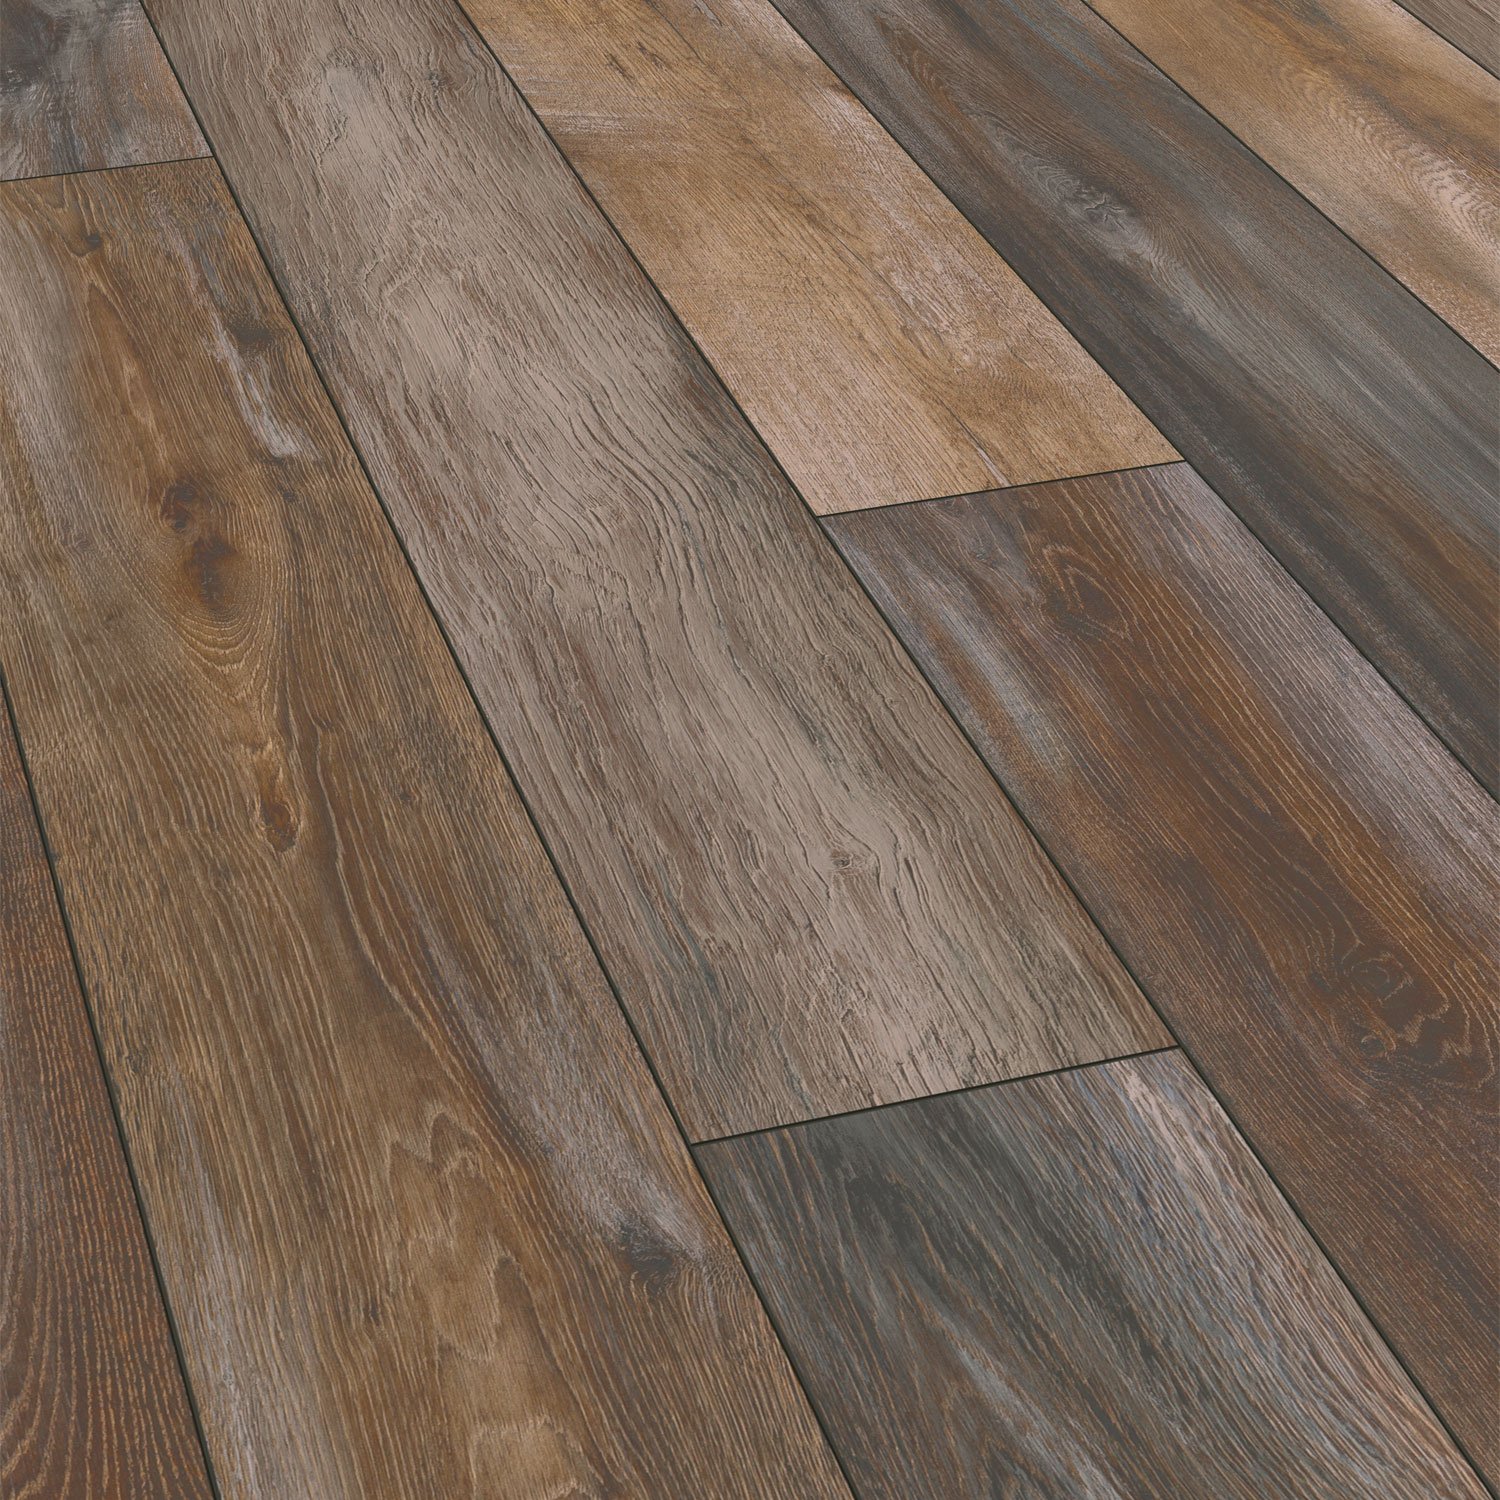 Tegola Robusto Rustic Oak Laminate, Rustic Dark Grey Laminate Flooring